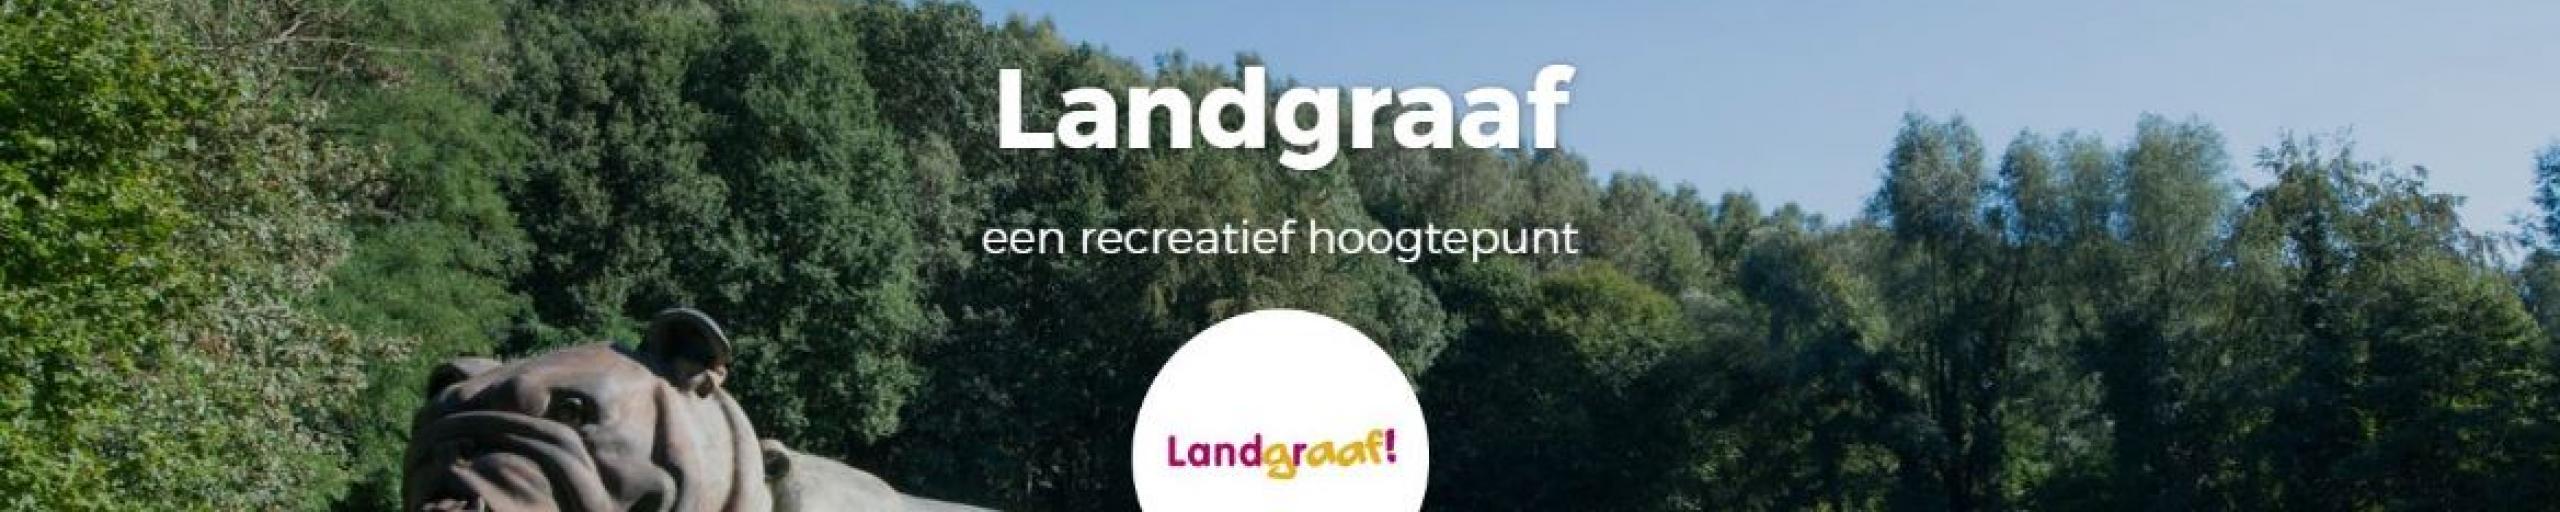 schermafdruk van website Toerisme Landgraaf 